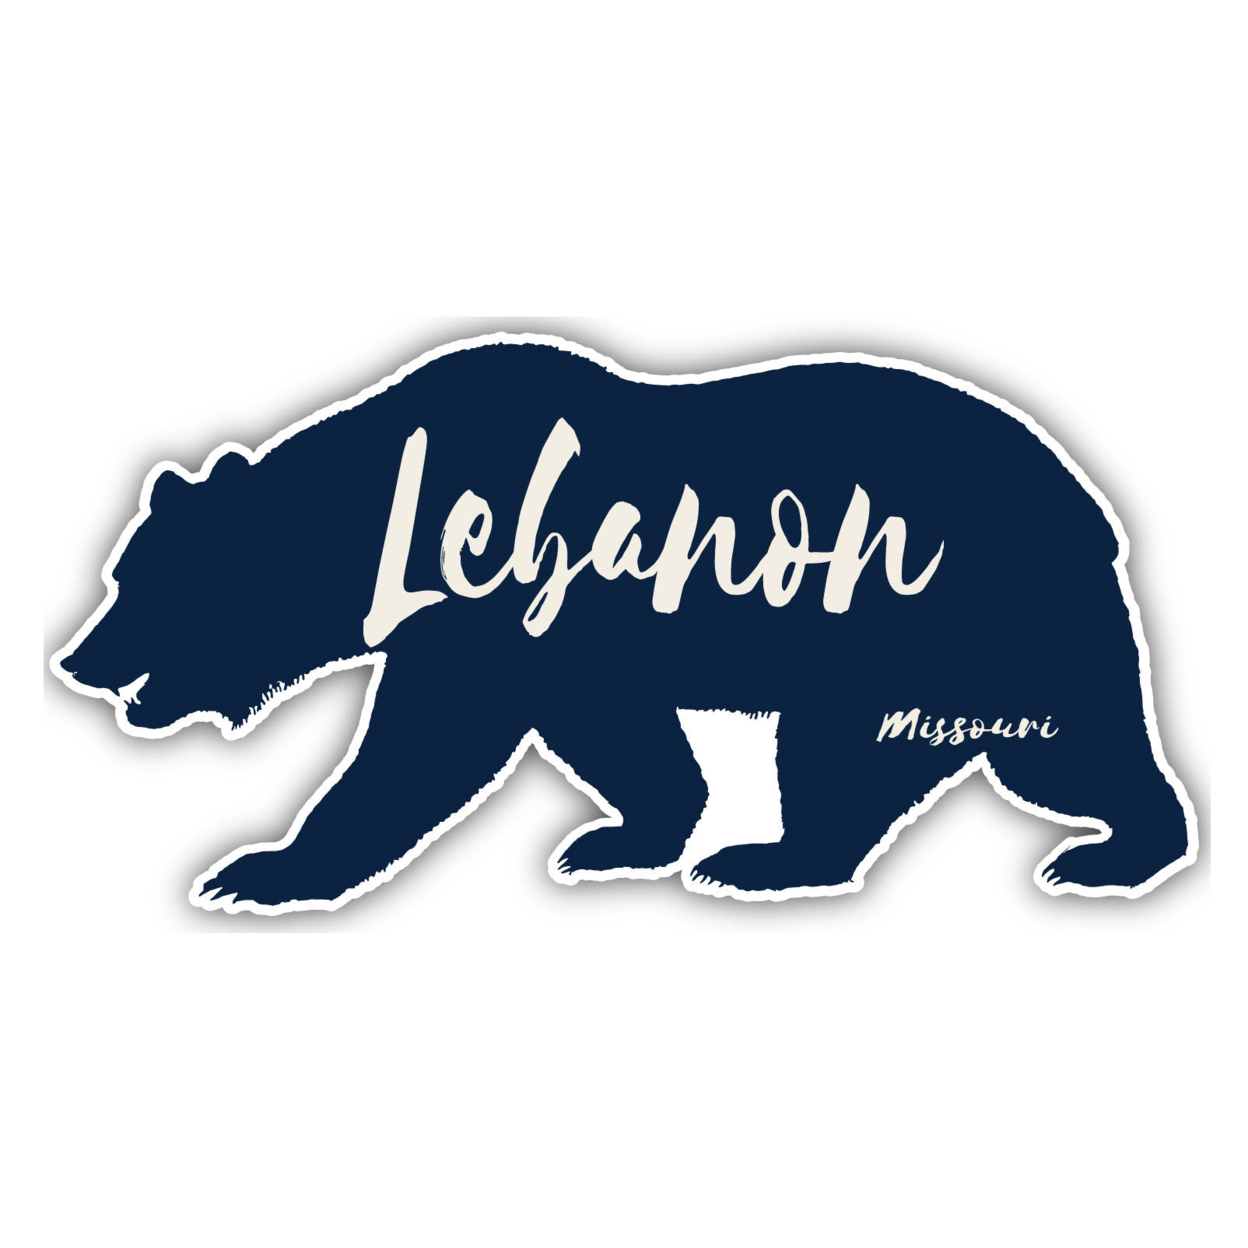 Lebanon Missouri Souvenir Decorative Stickers (Choose Theme And Size) - 2-Inch, Tent